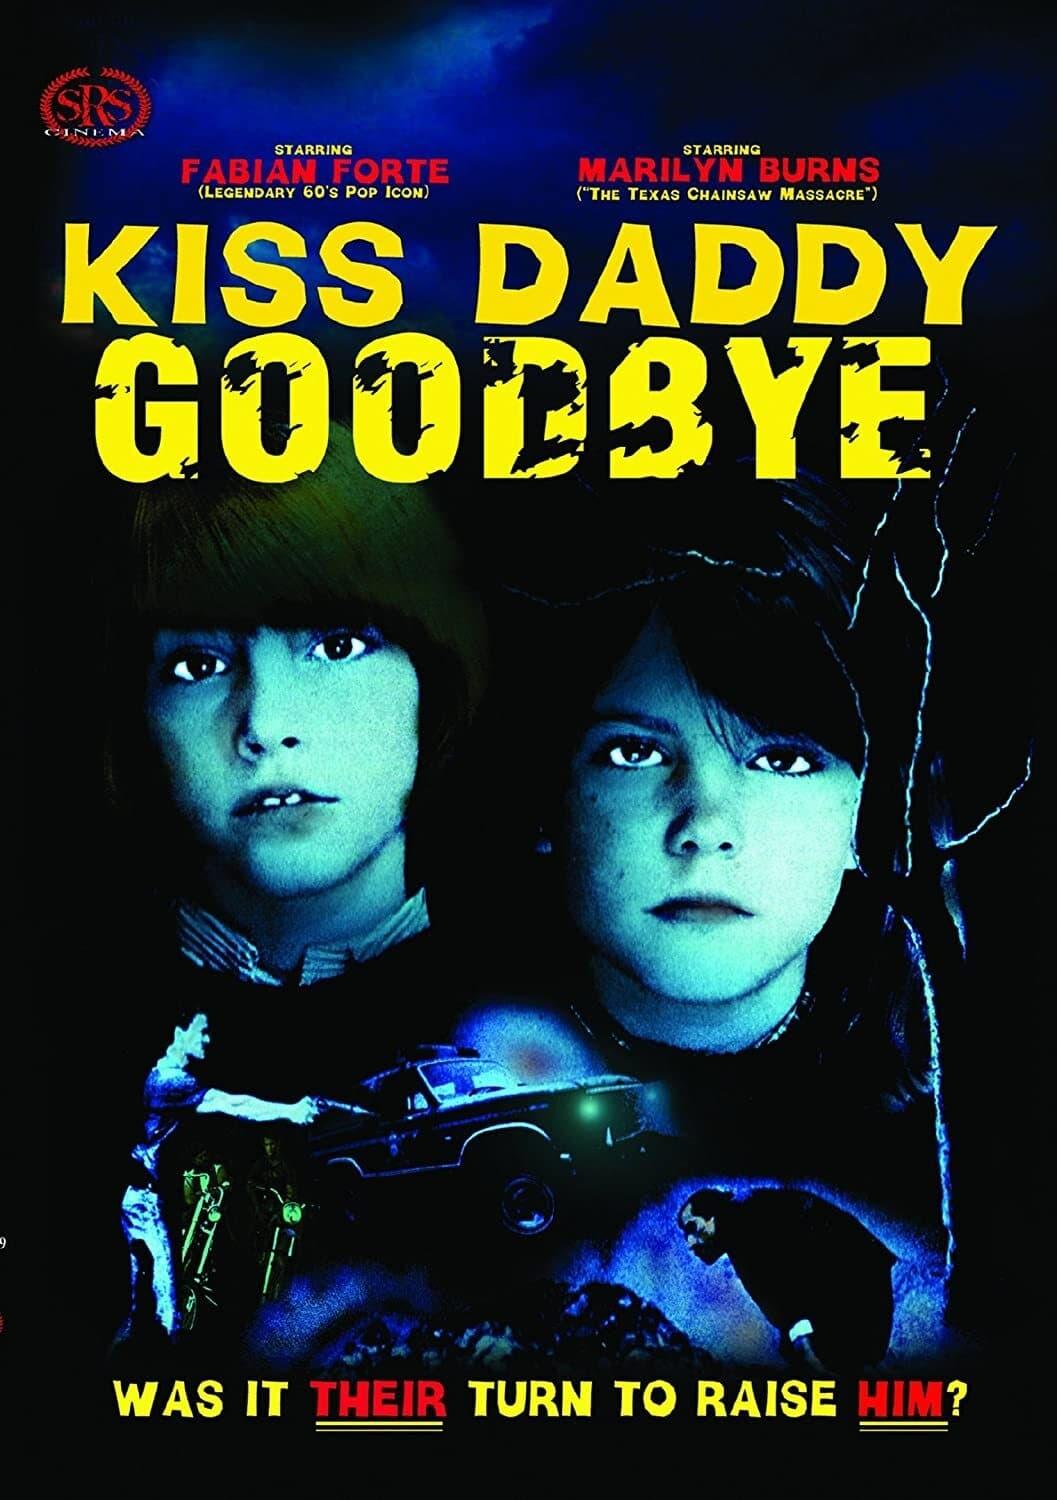 Kiss Daddy Goodbye poster